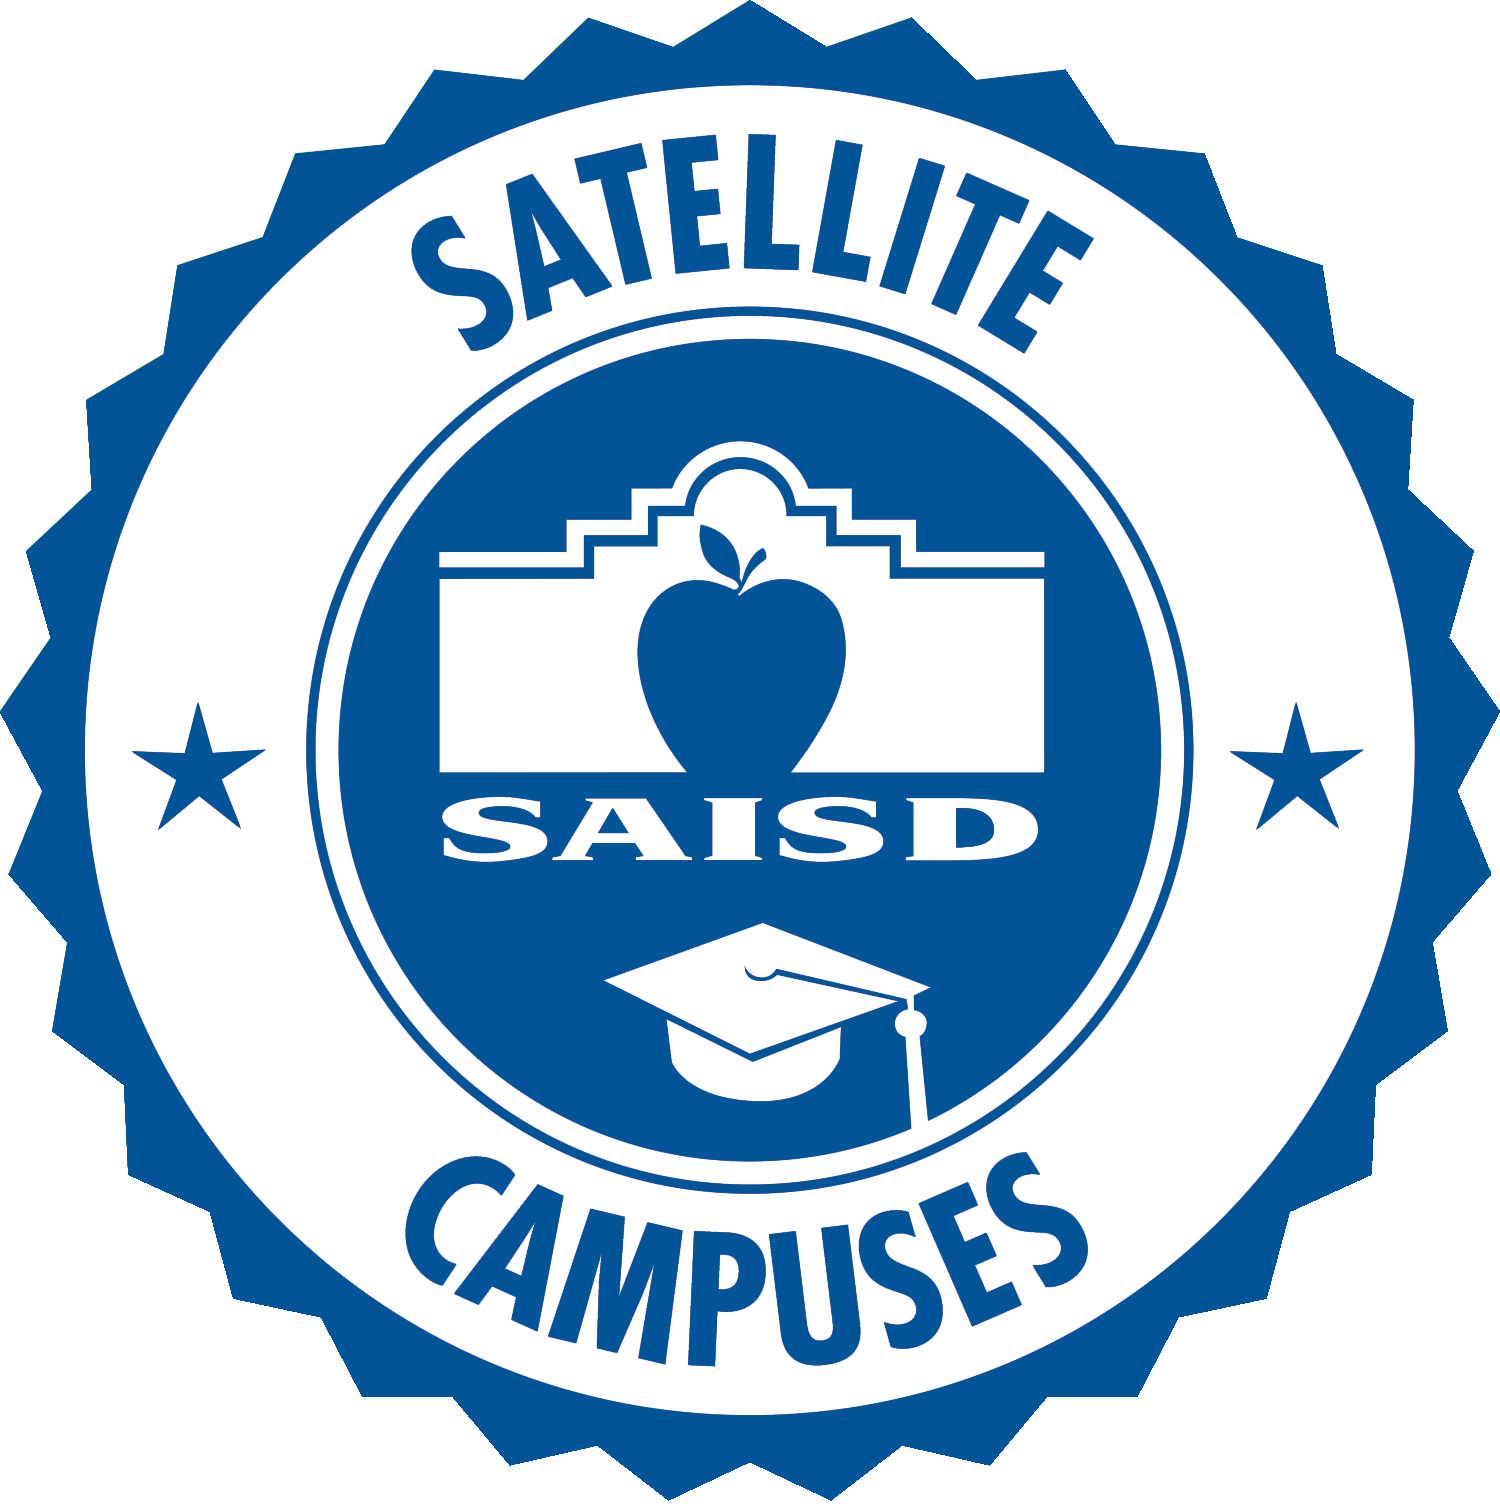 Satellite Campuses Seal